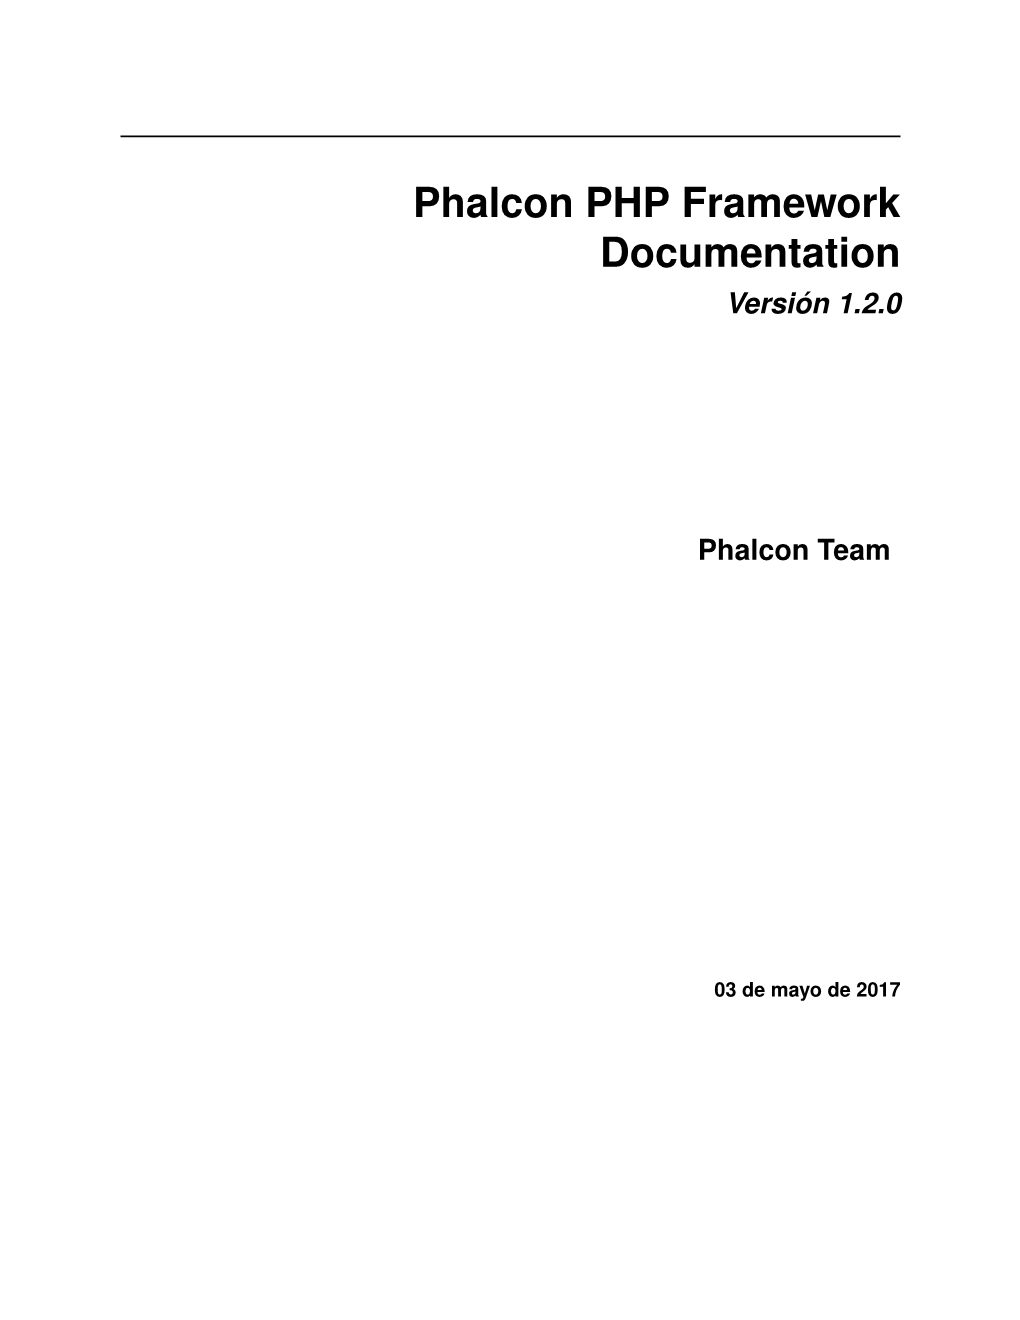 Phalcon PHP Framework Documentation Versión 1.2.0